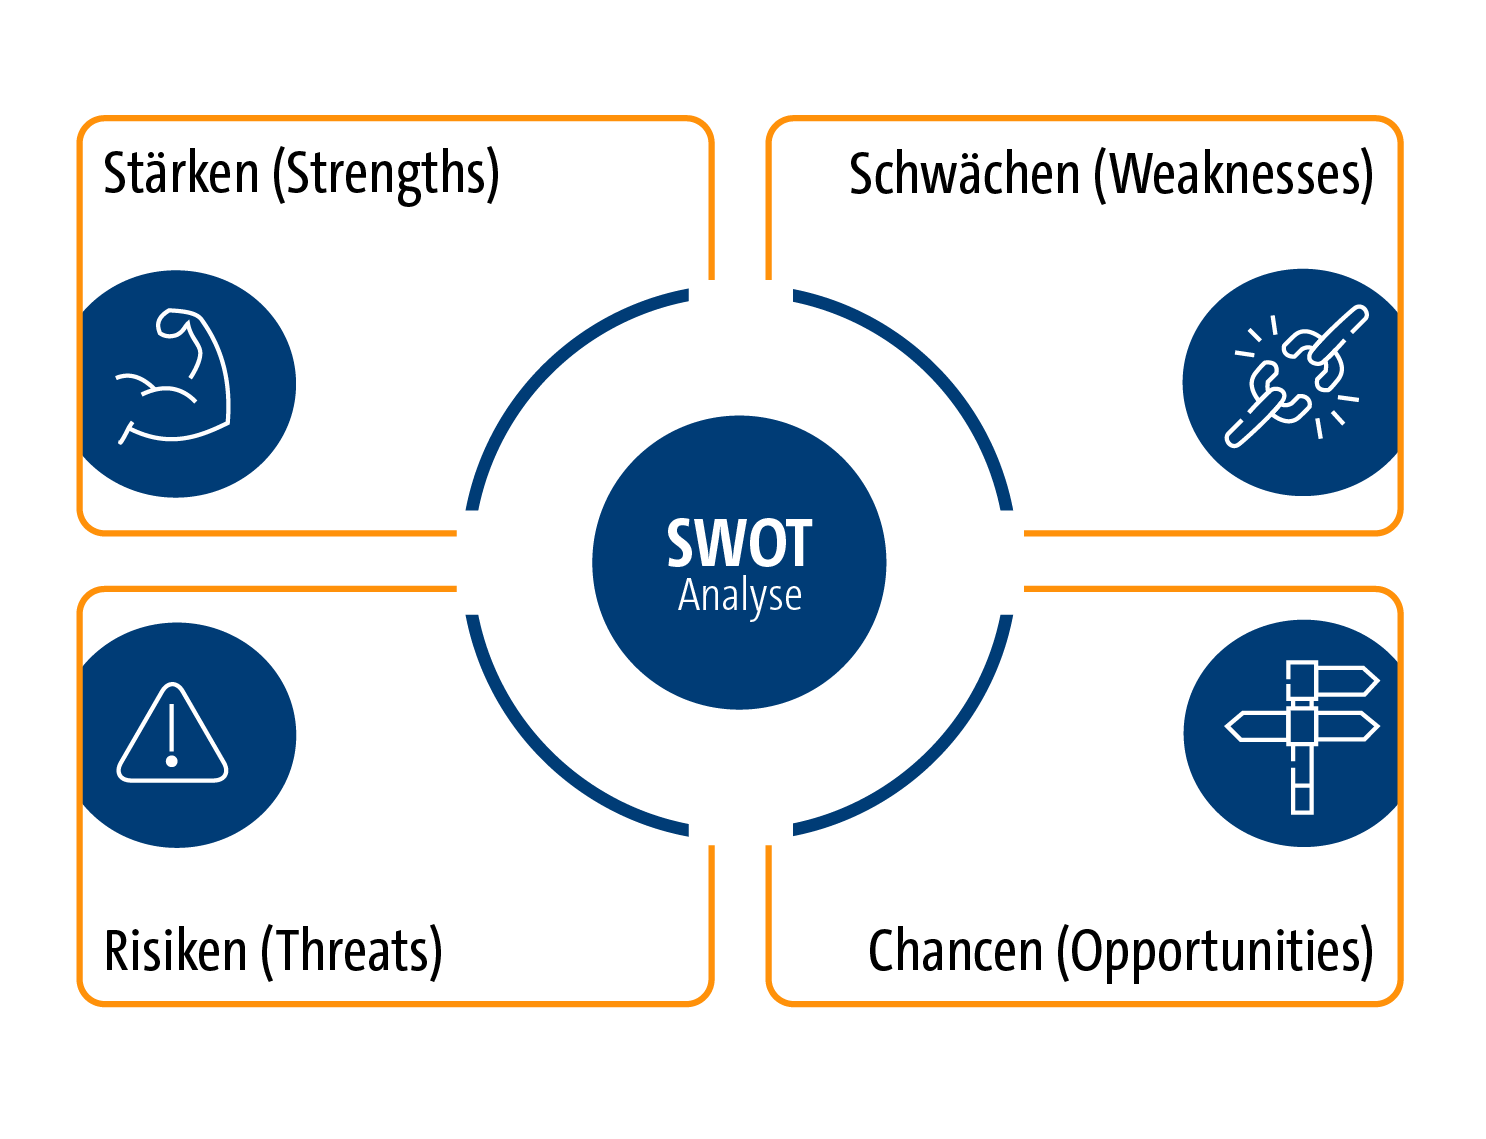 SWOT-Analyse